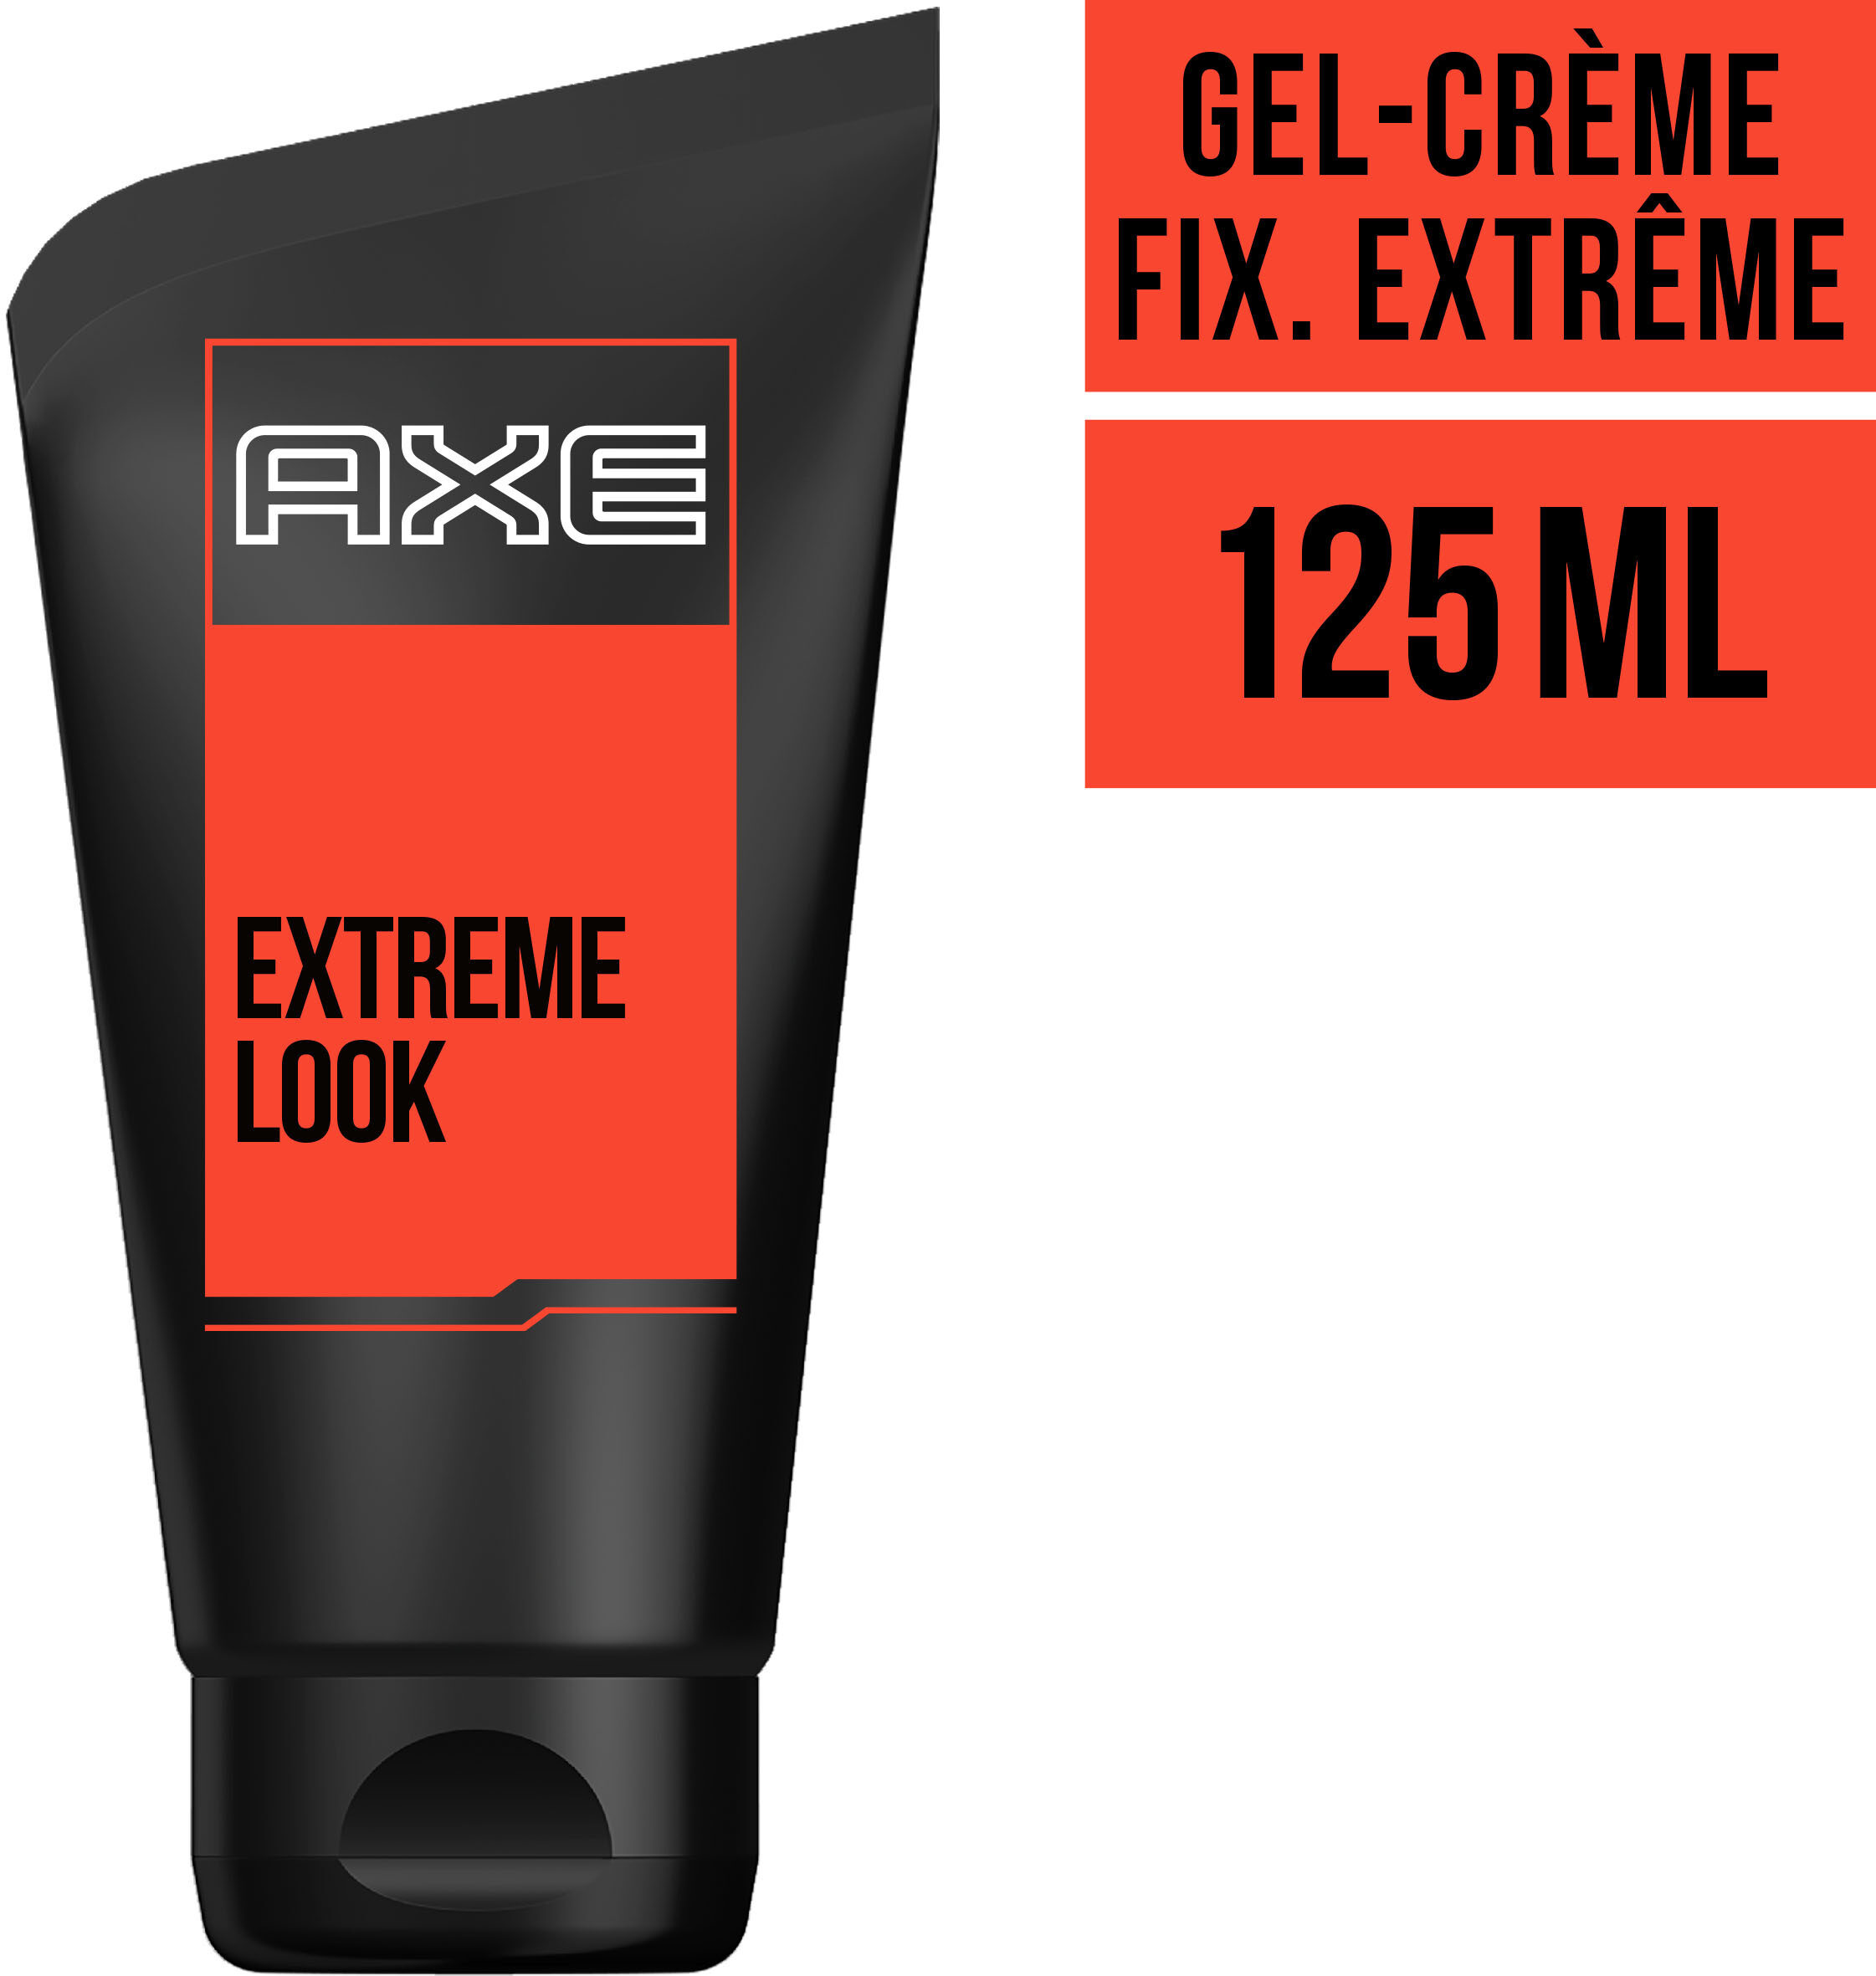 Axe Gel Cheveux Adrénaline Fixation Extrême 125ml - Produit - fr